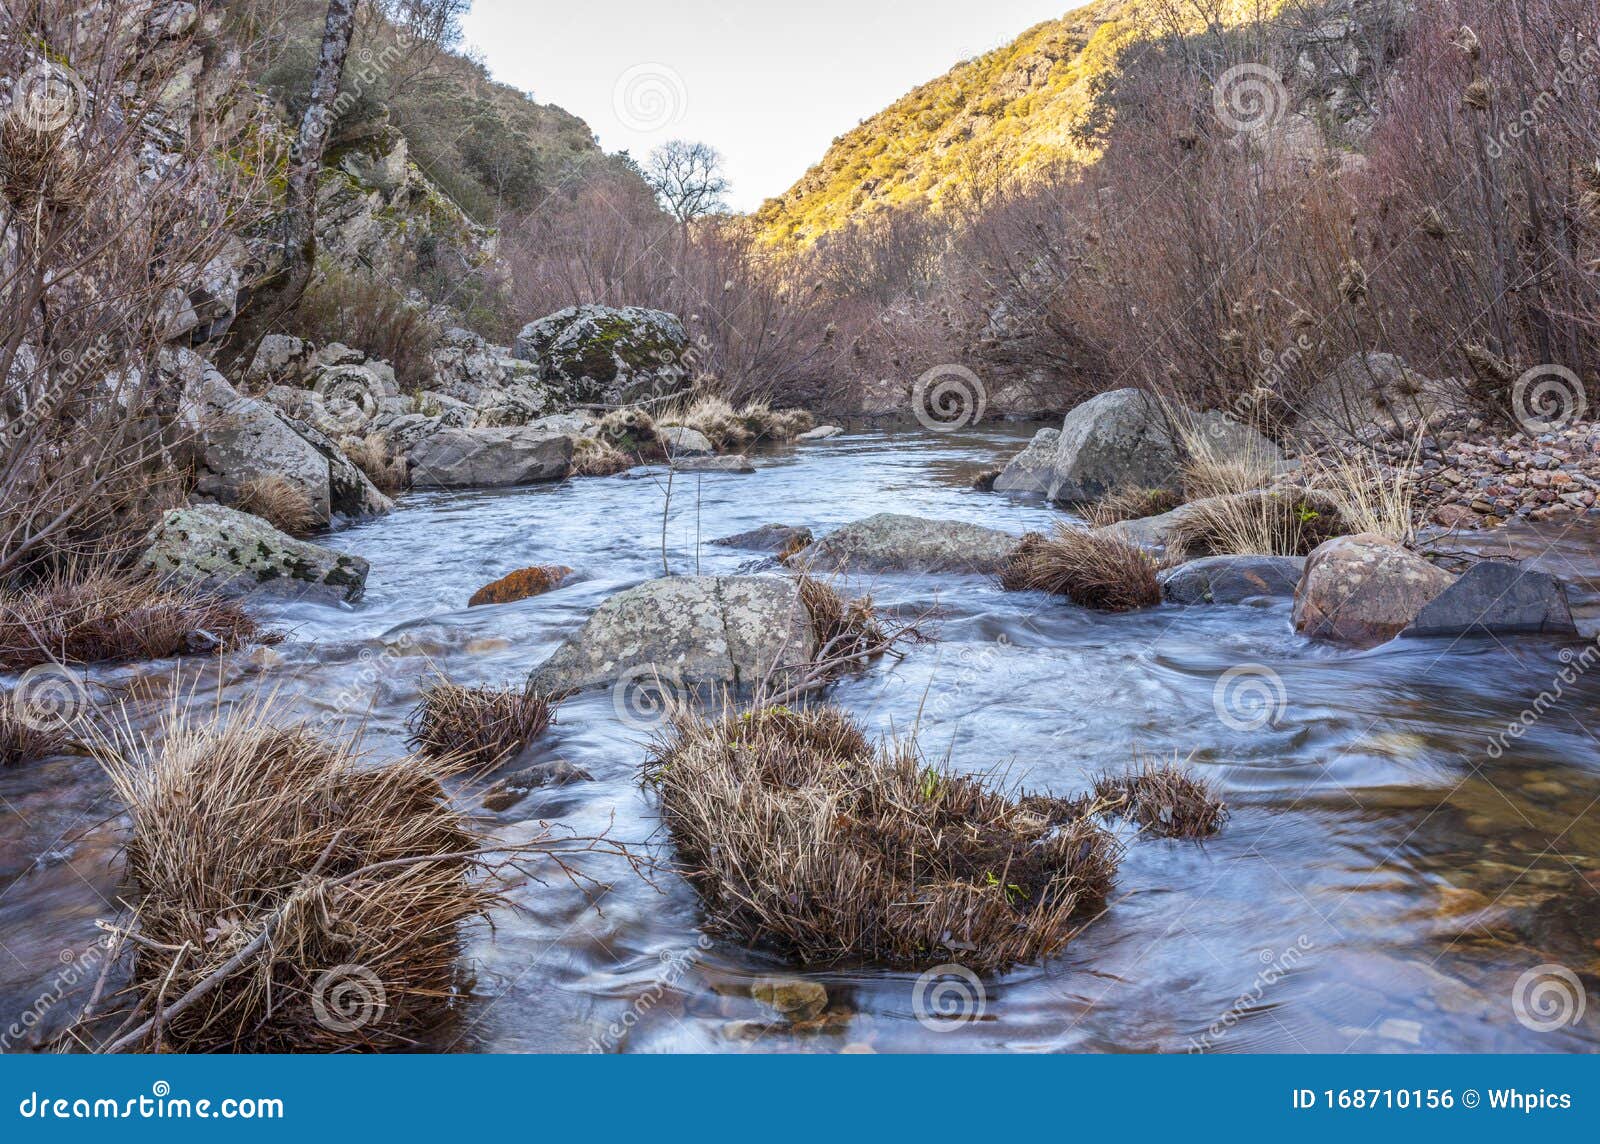 river estena flowing in winter. national park of cabaneros, spain